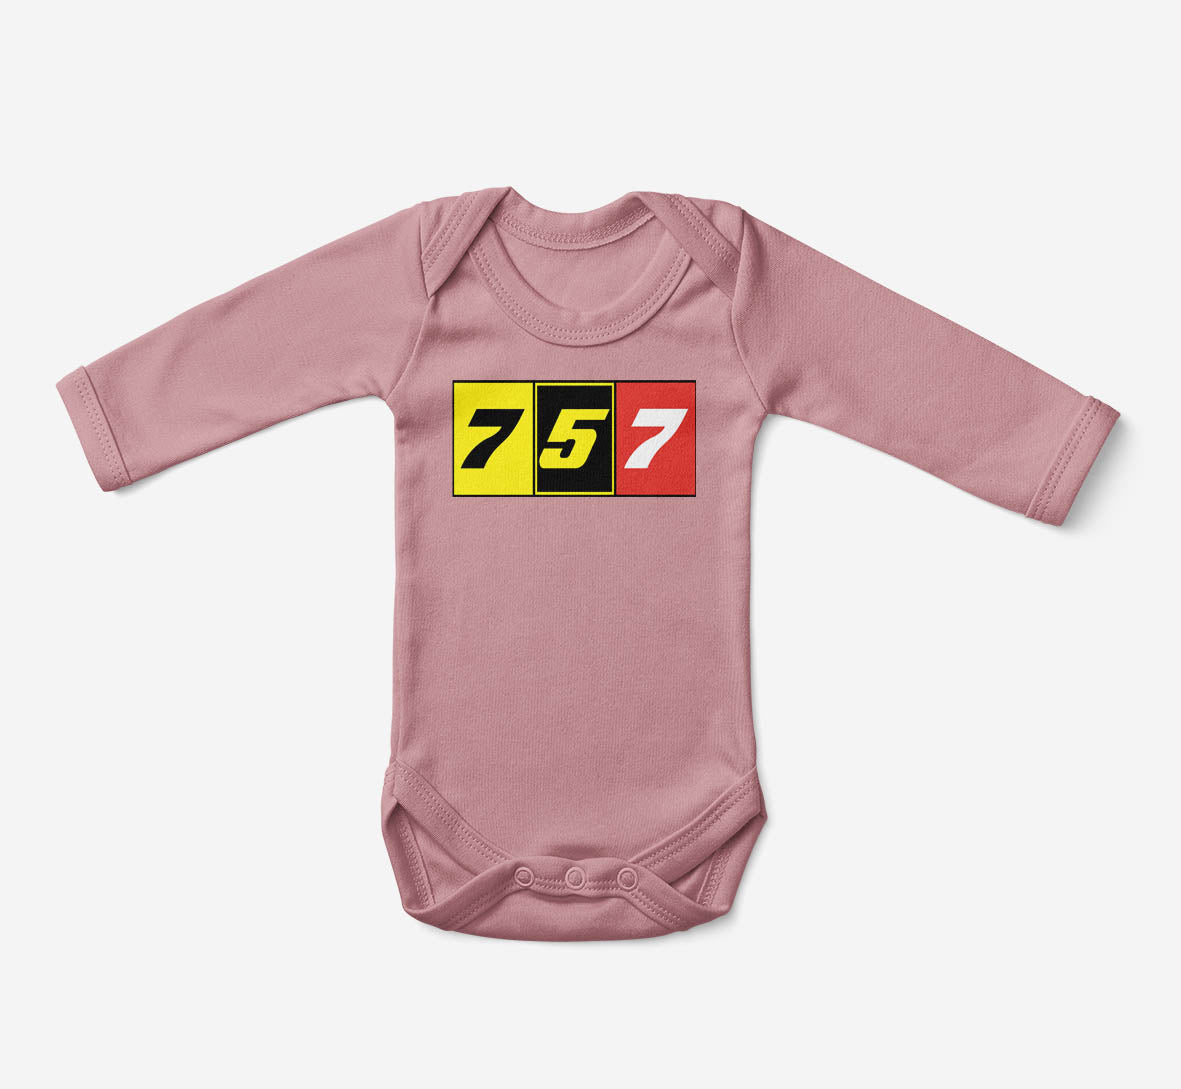 Flat Colourful 767 Designed Baby Bodysuits